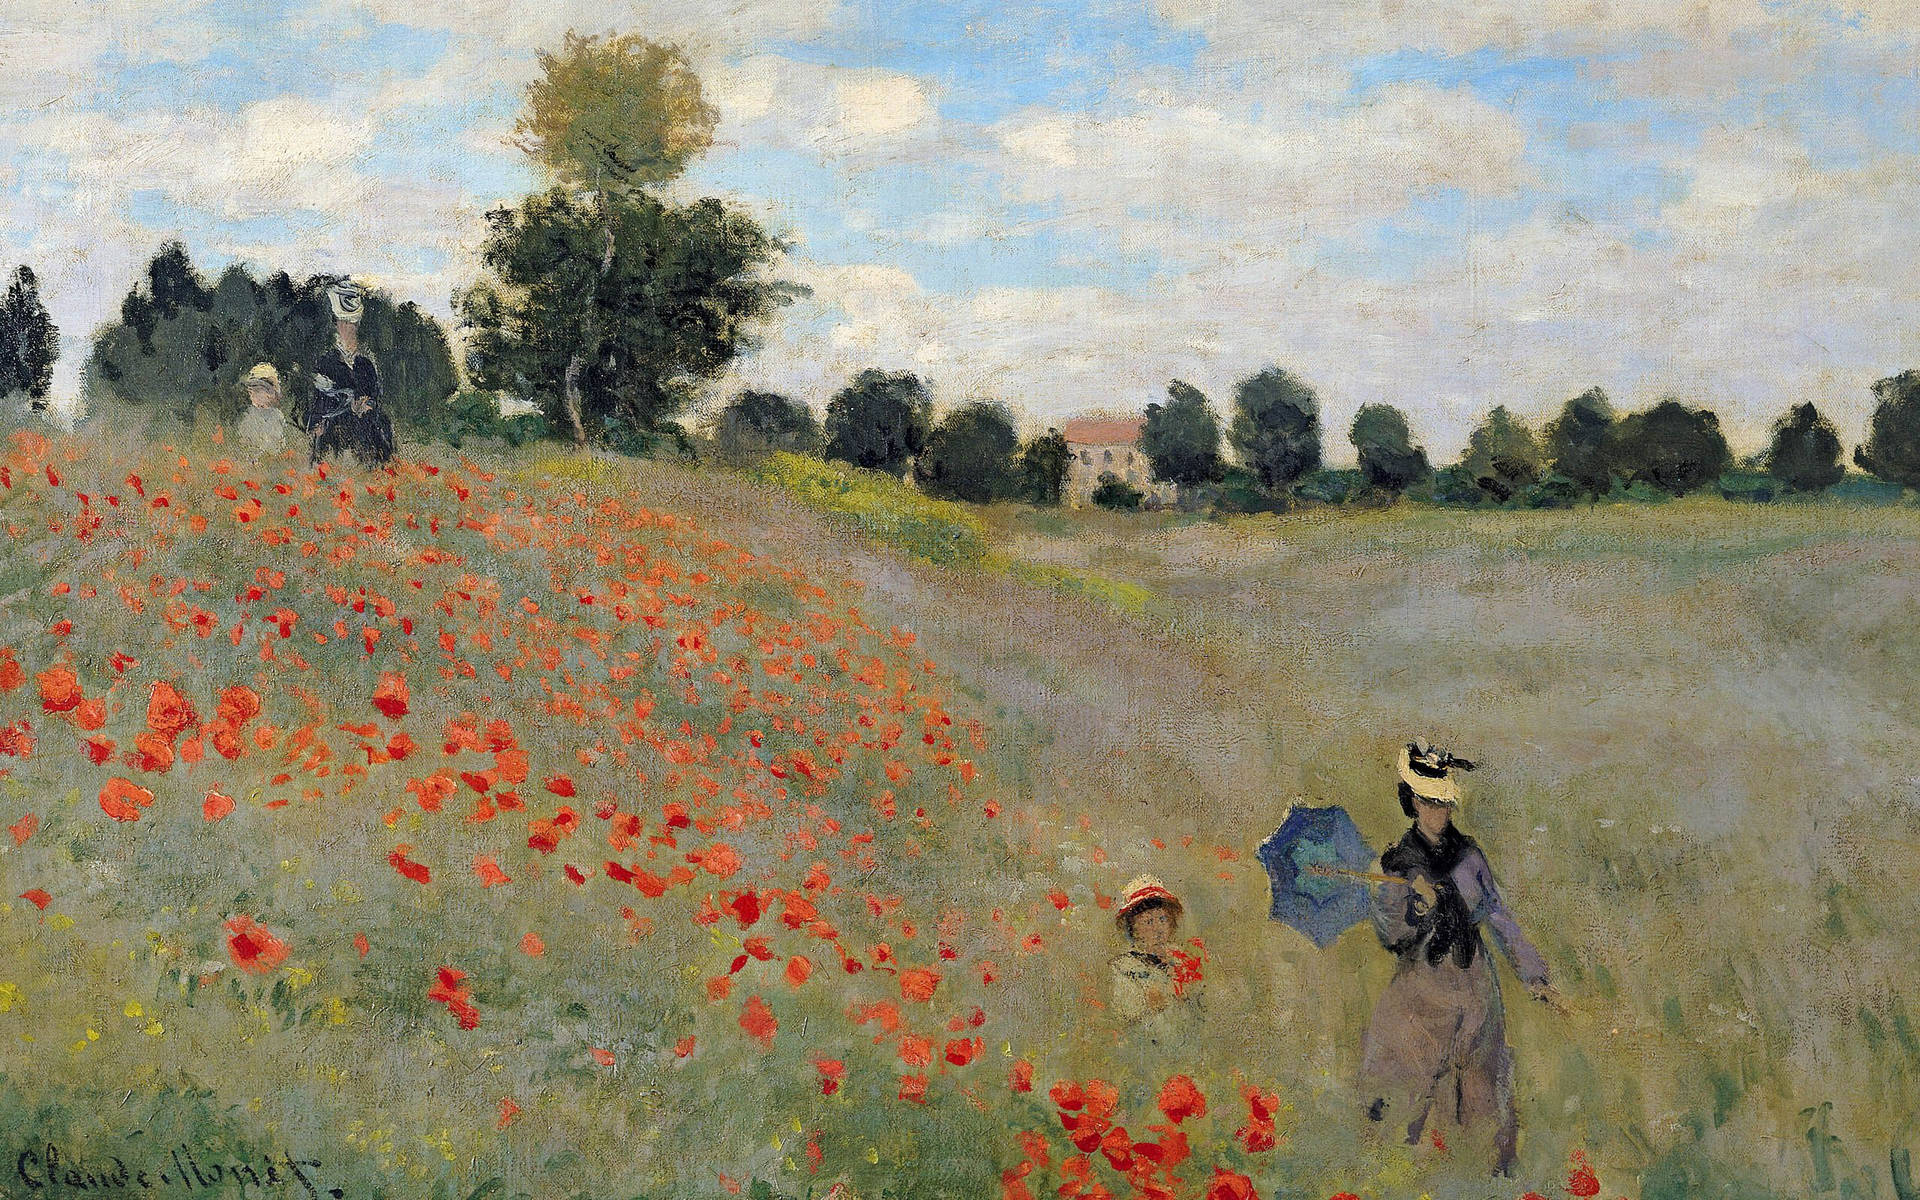 Caption: Renoir’s Masterpiece - Women On The Field